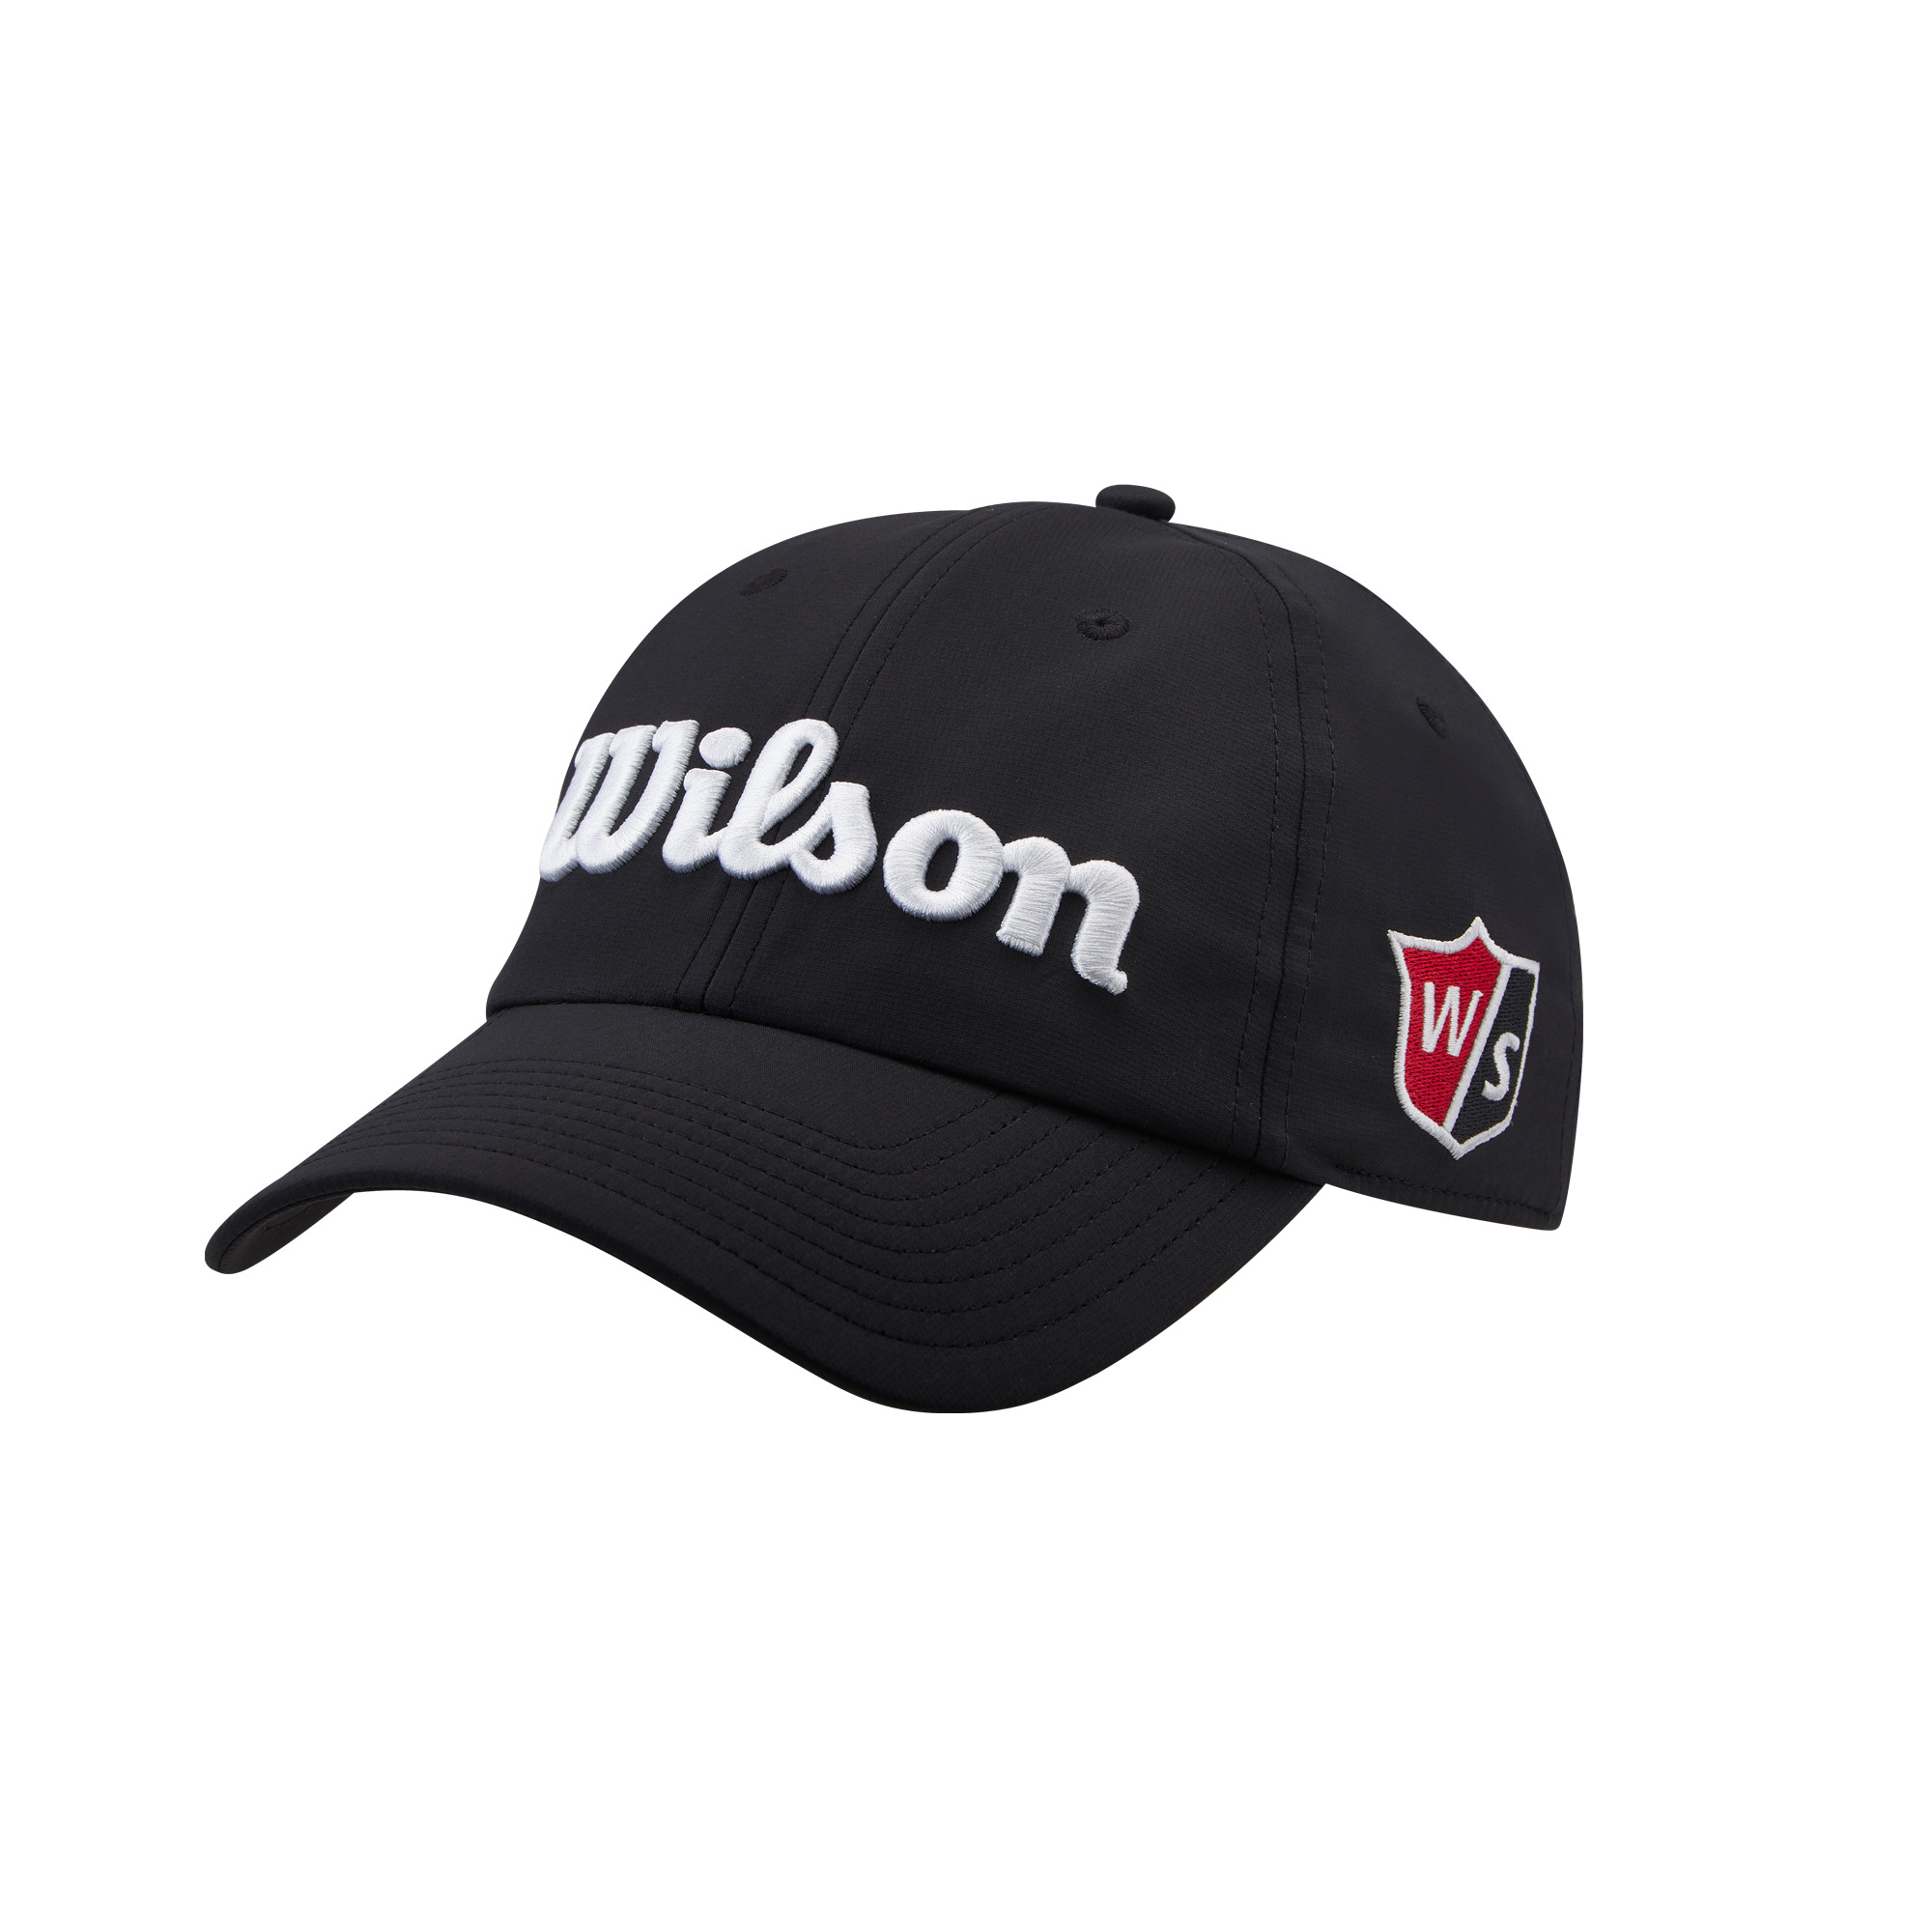 Wilson Men's Pro Tour Golf Hat Black and White - Walmart.com